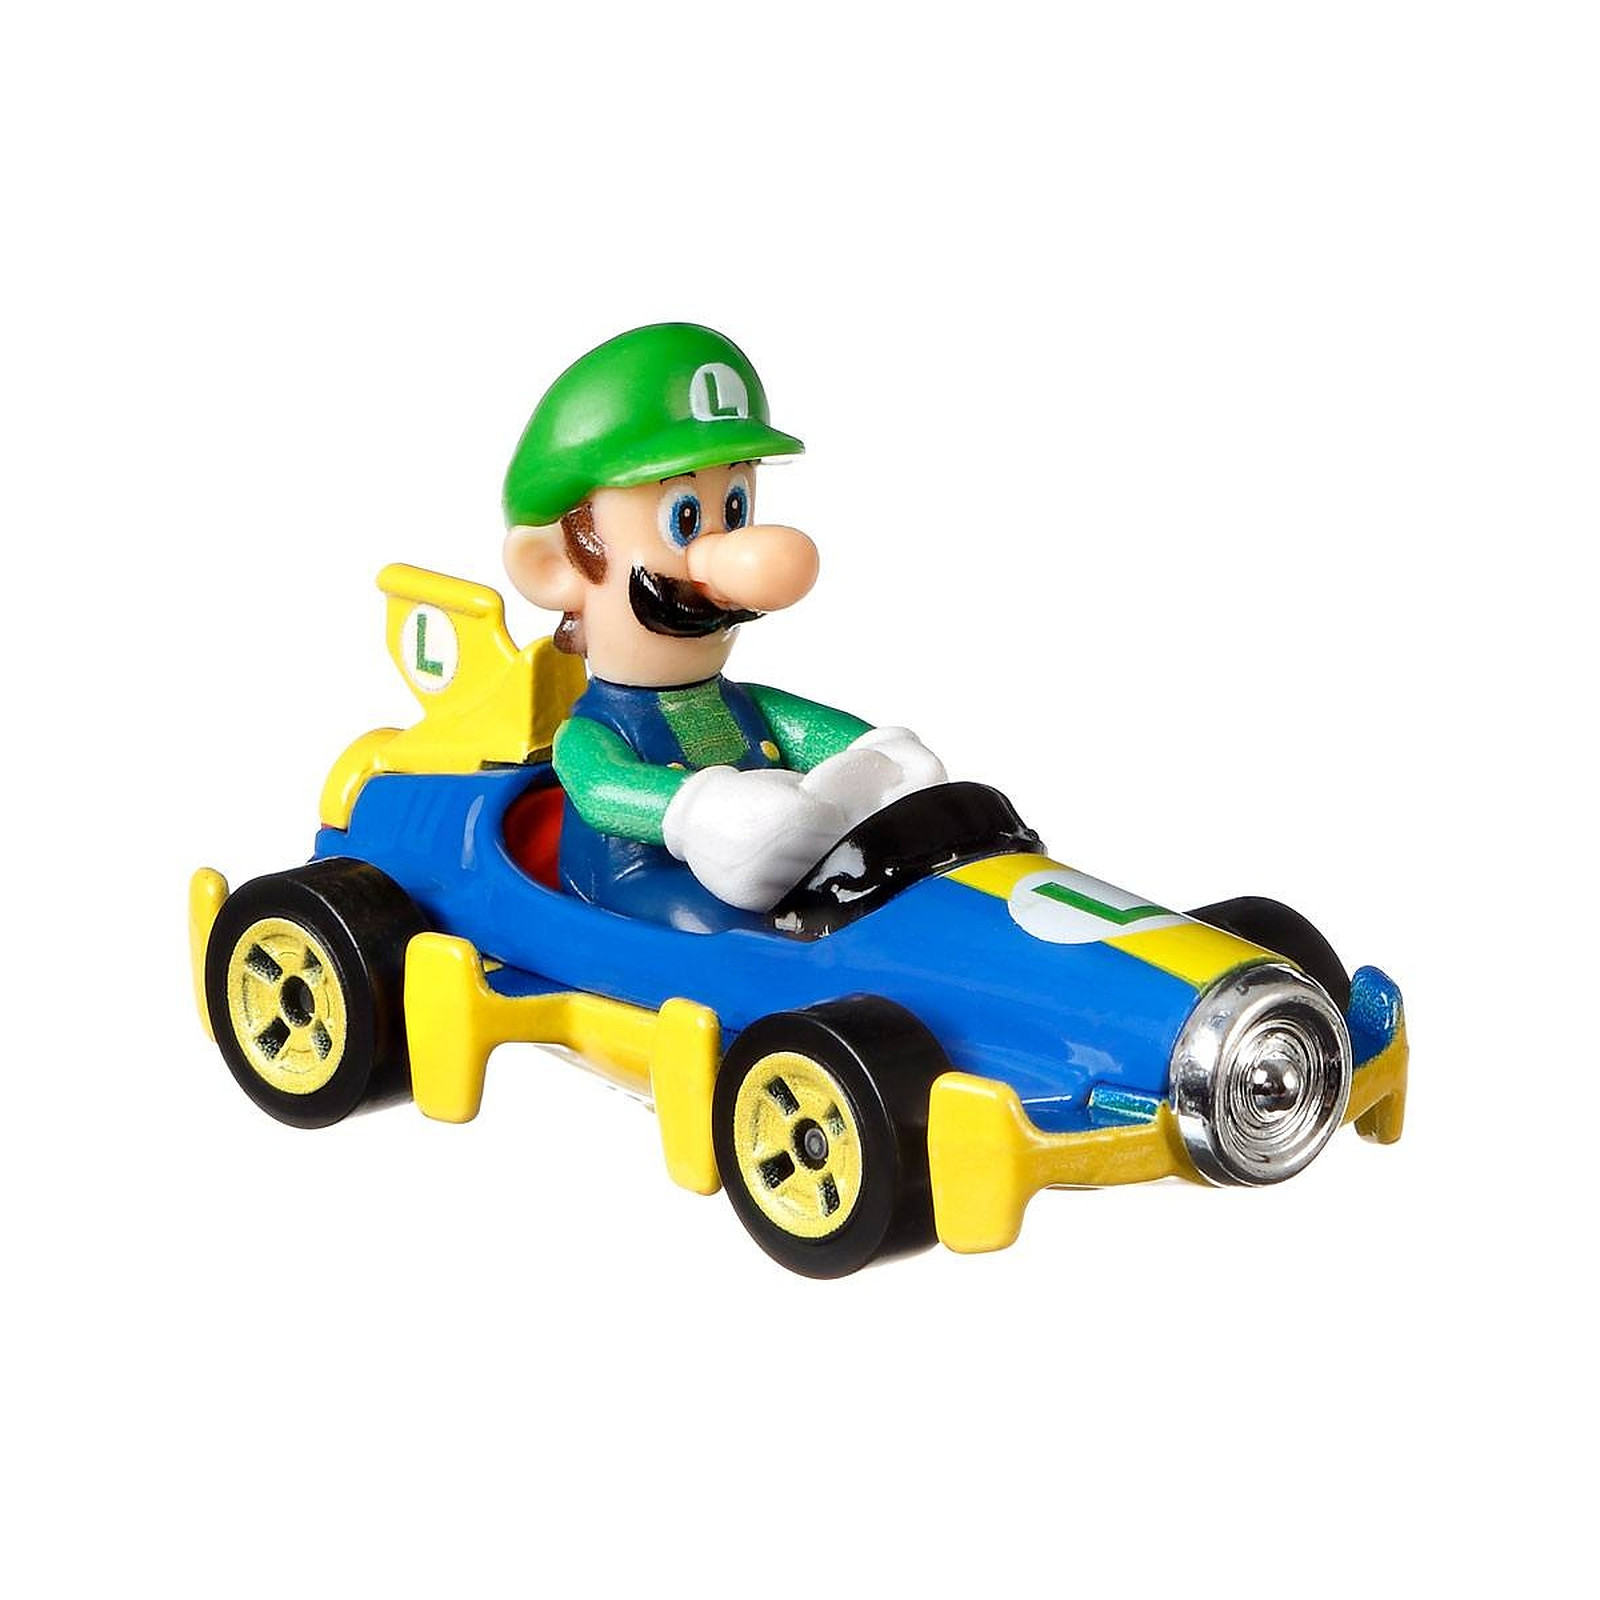 Super Mario Kart - Replique metal Hot Wheels 1/64 Luigi (Mach 8) 8 cm - Figurines Mattel